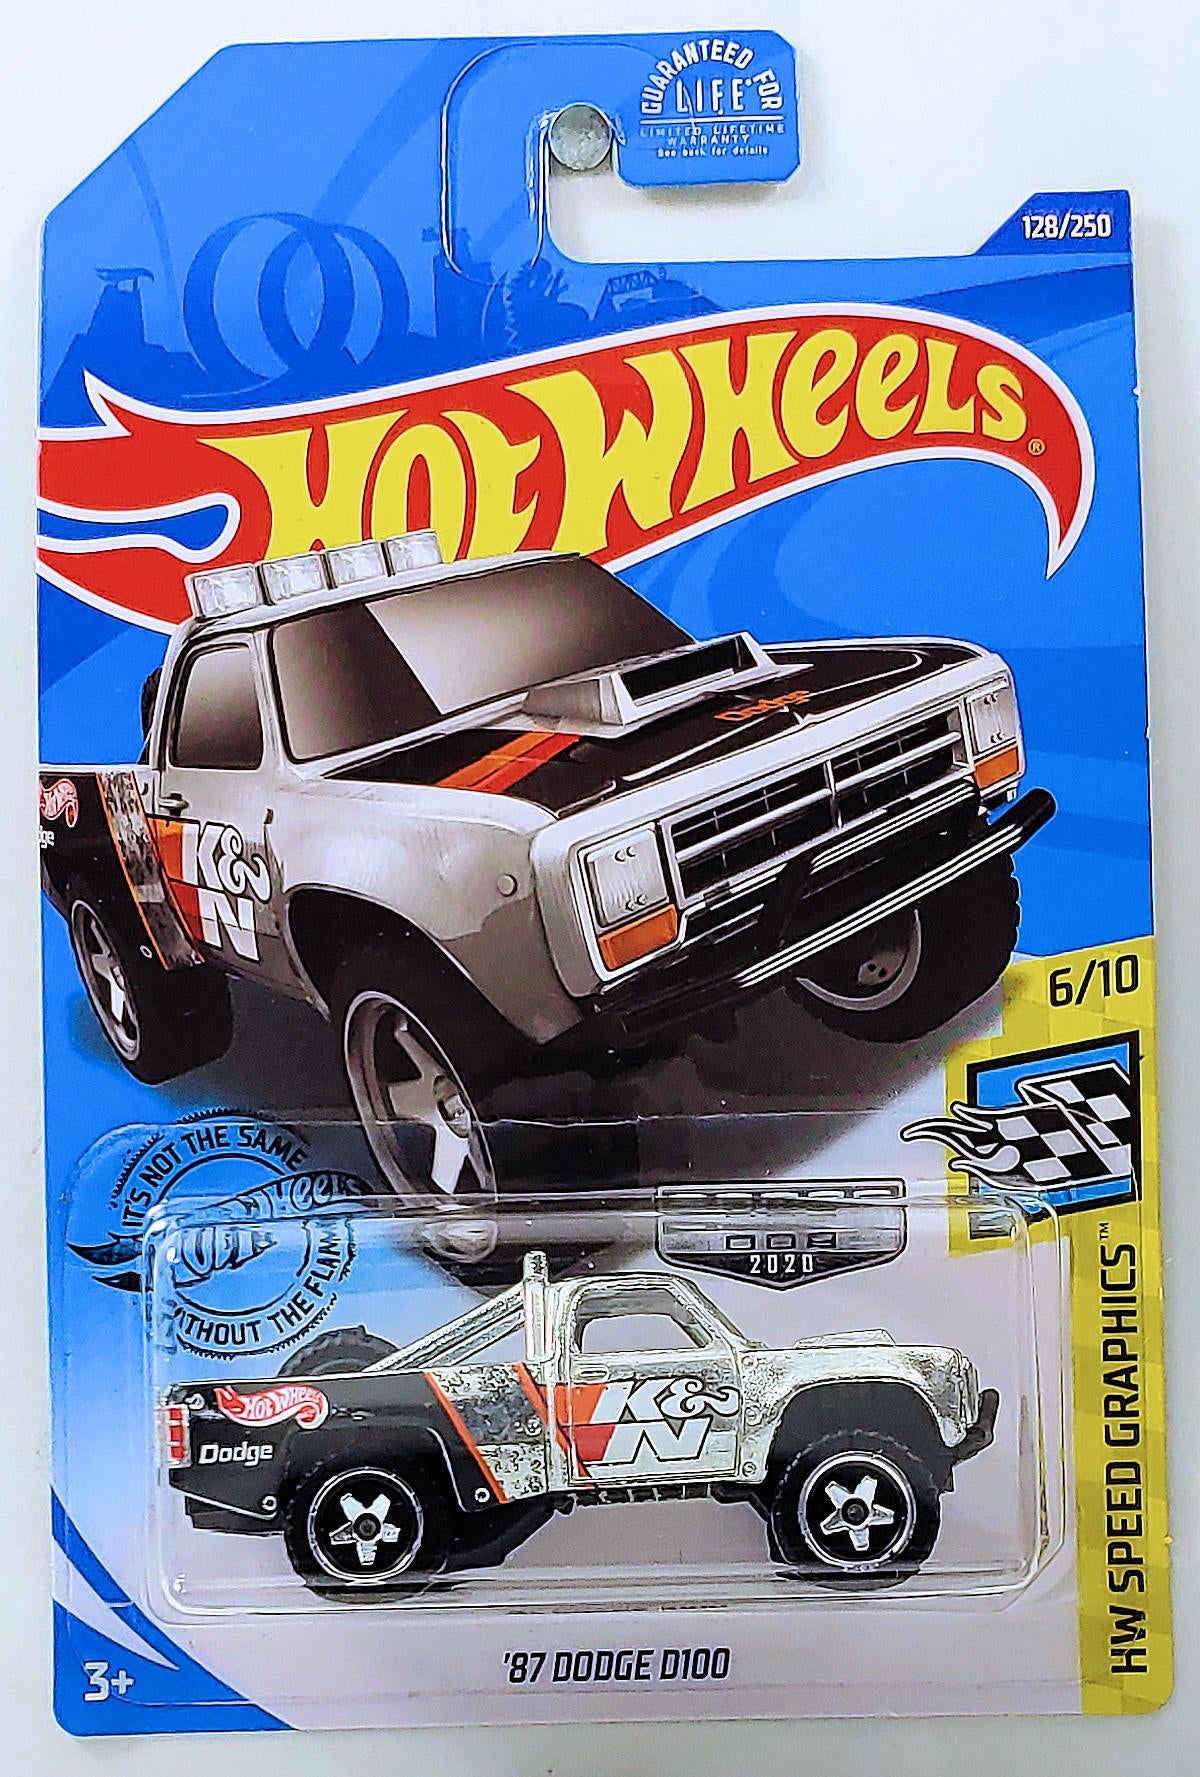 Hot Wheels 2020 - Collector # 128/250 - HW Speed Graphics 6/10 - ZAMAC 008 - '87 Dodge D100 - ZAMAC / K&N Filters - USA Card - Walmart Exclusive